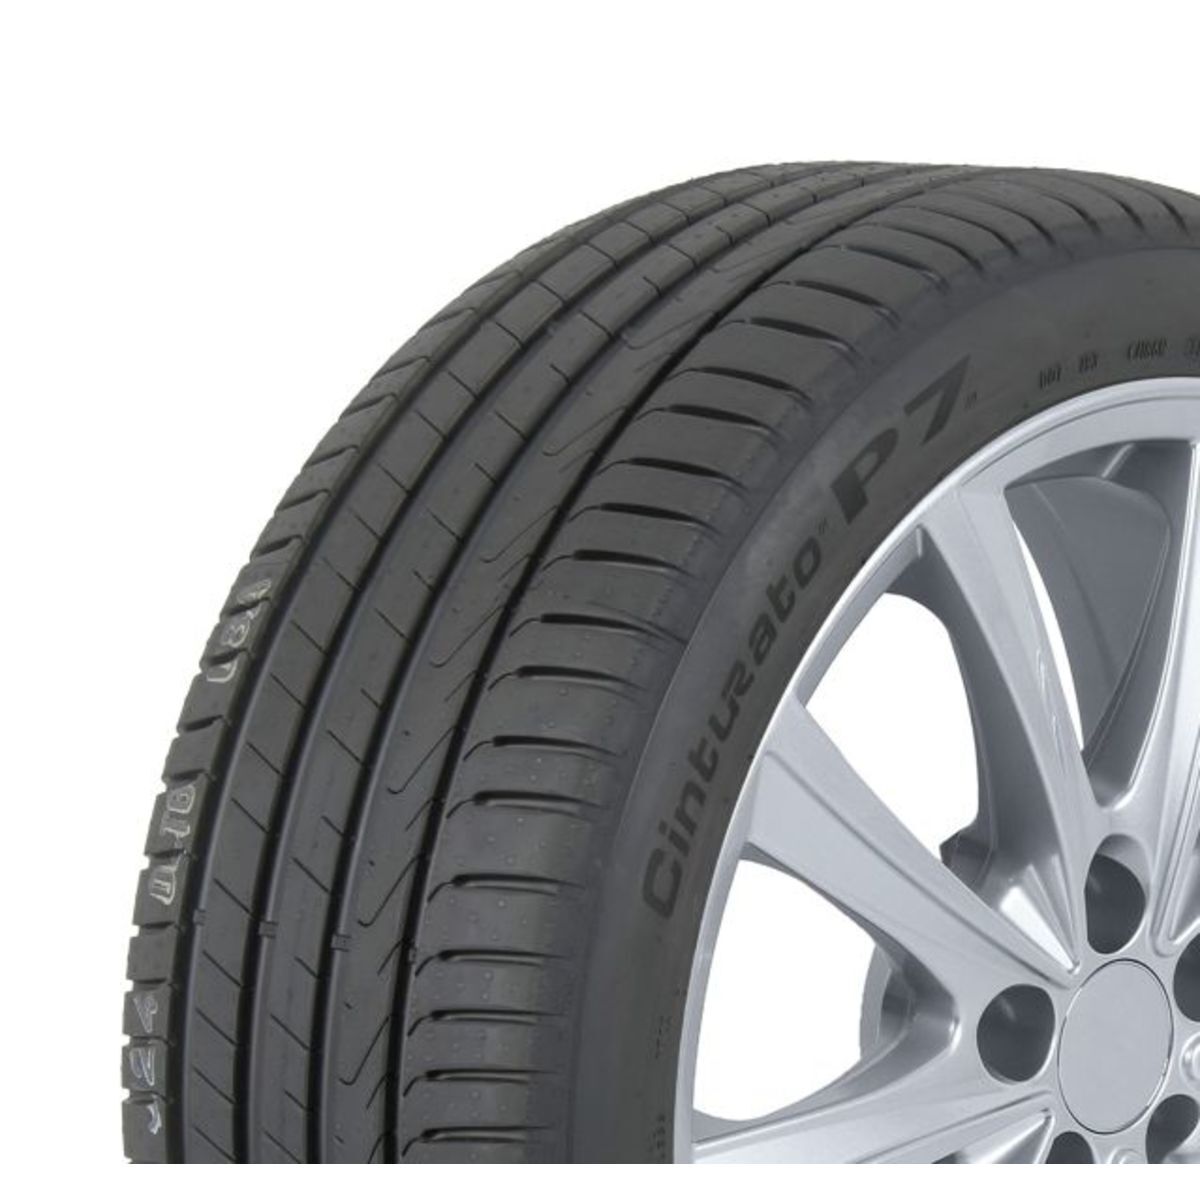 Neumáticos de verano PIRELLI Cinturato P7 215/55R17 94W